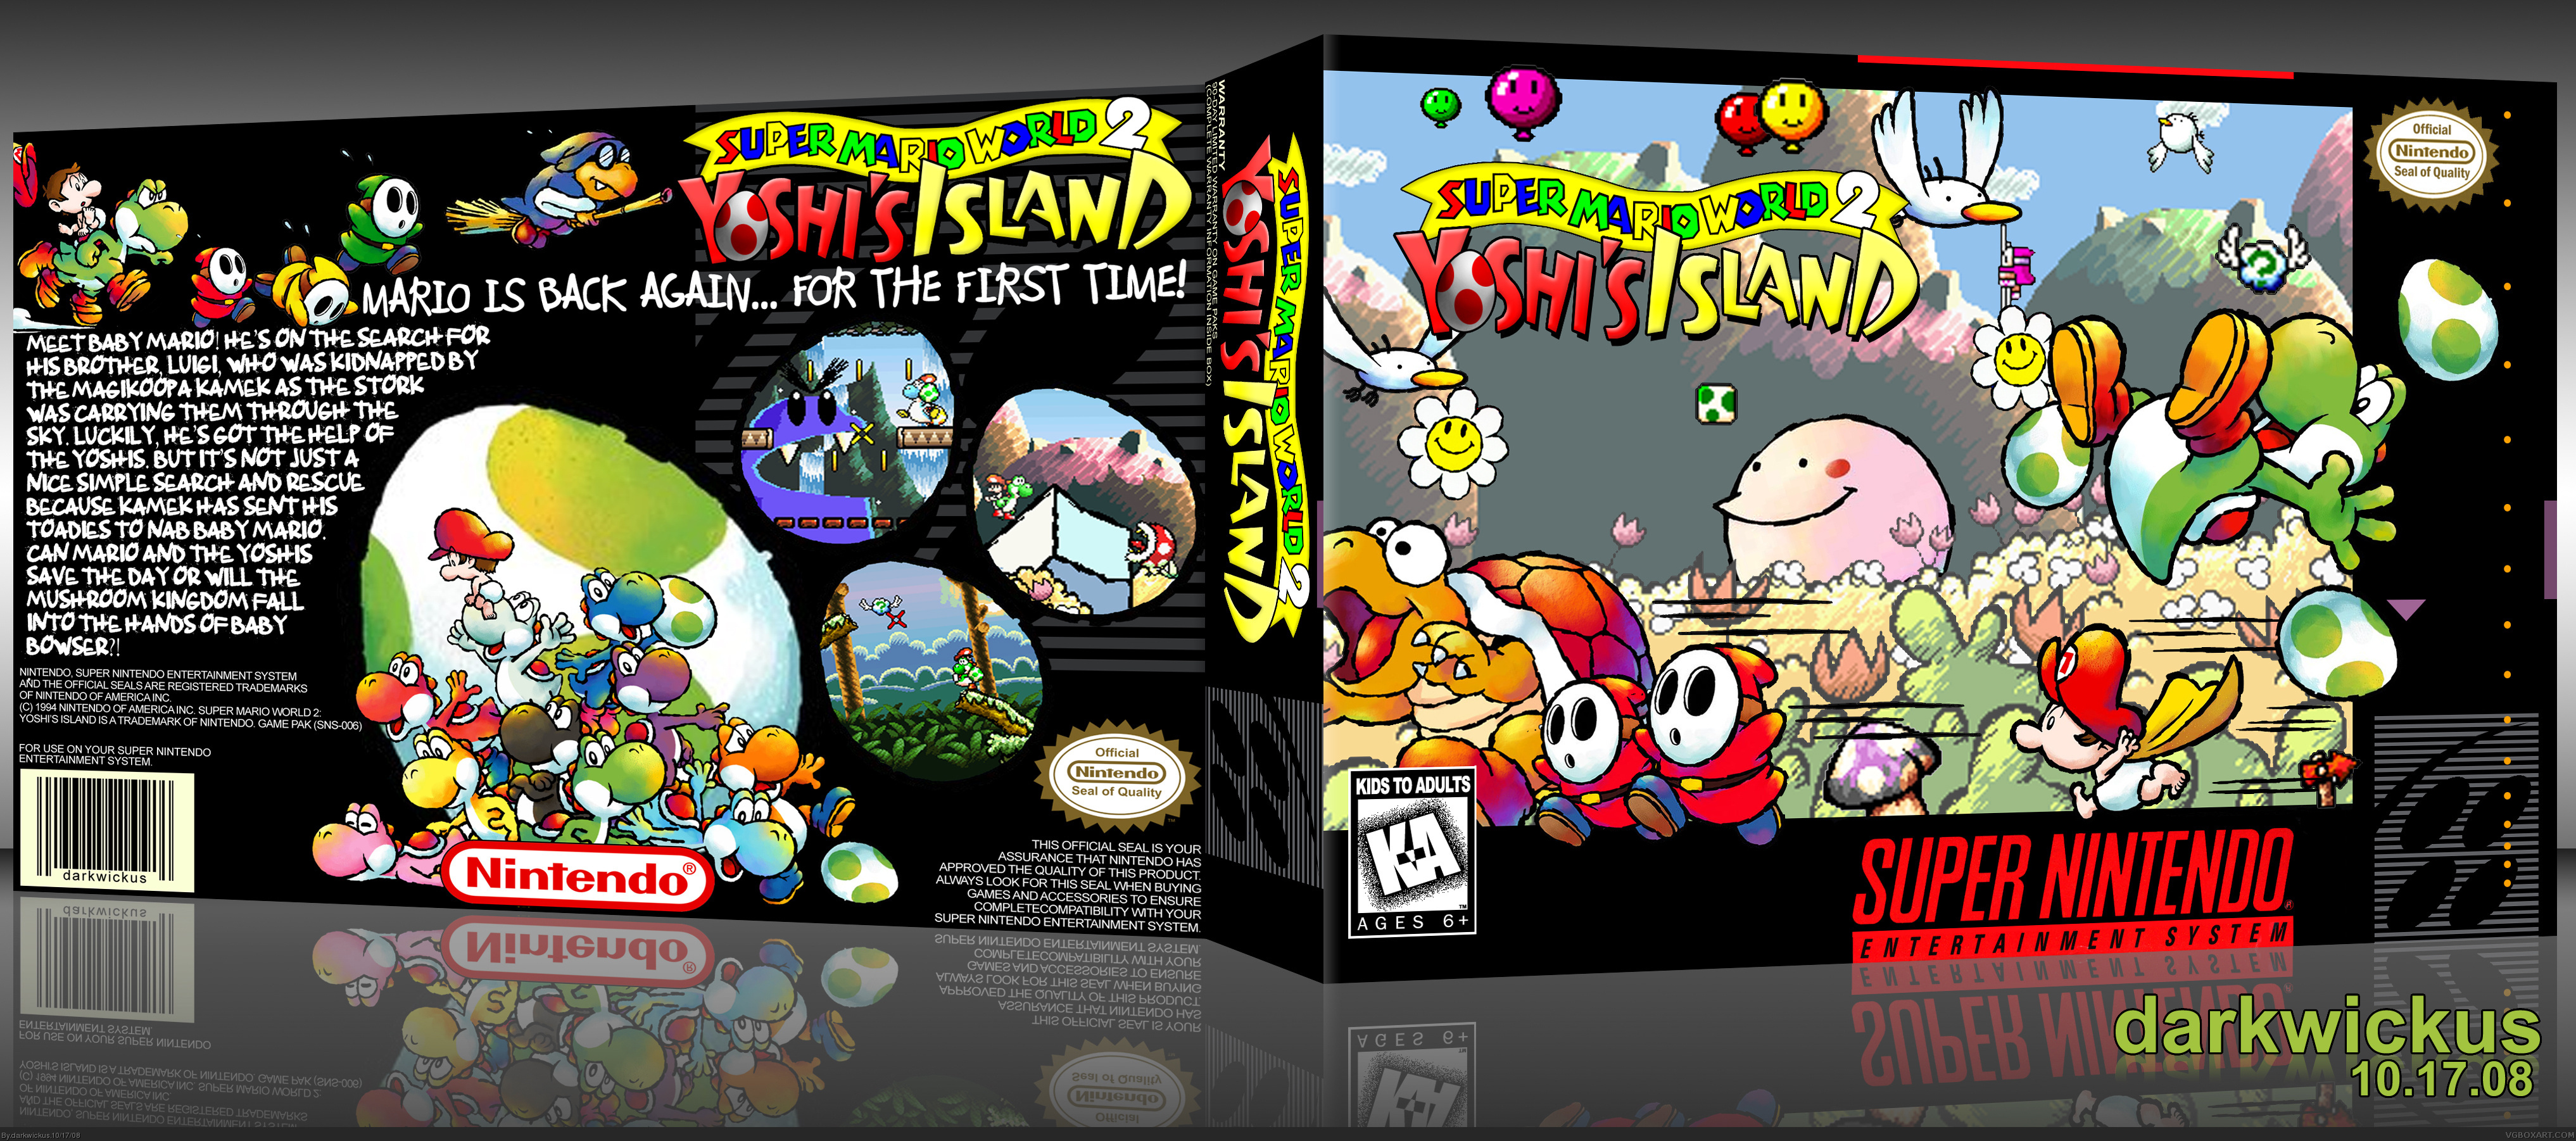 Super Mario World 2: Yoshi's Island SNES Box Art Cover by darkwickus